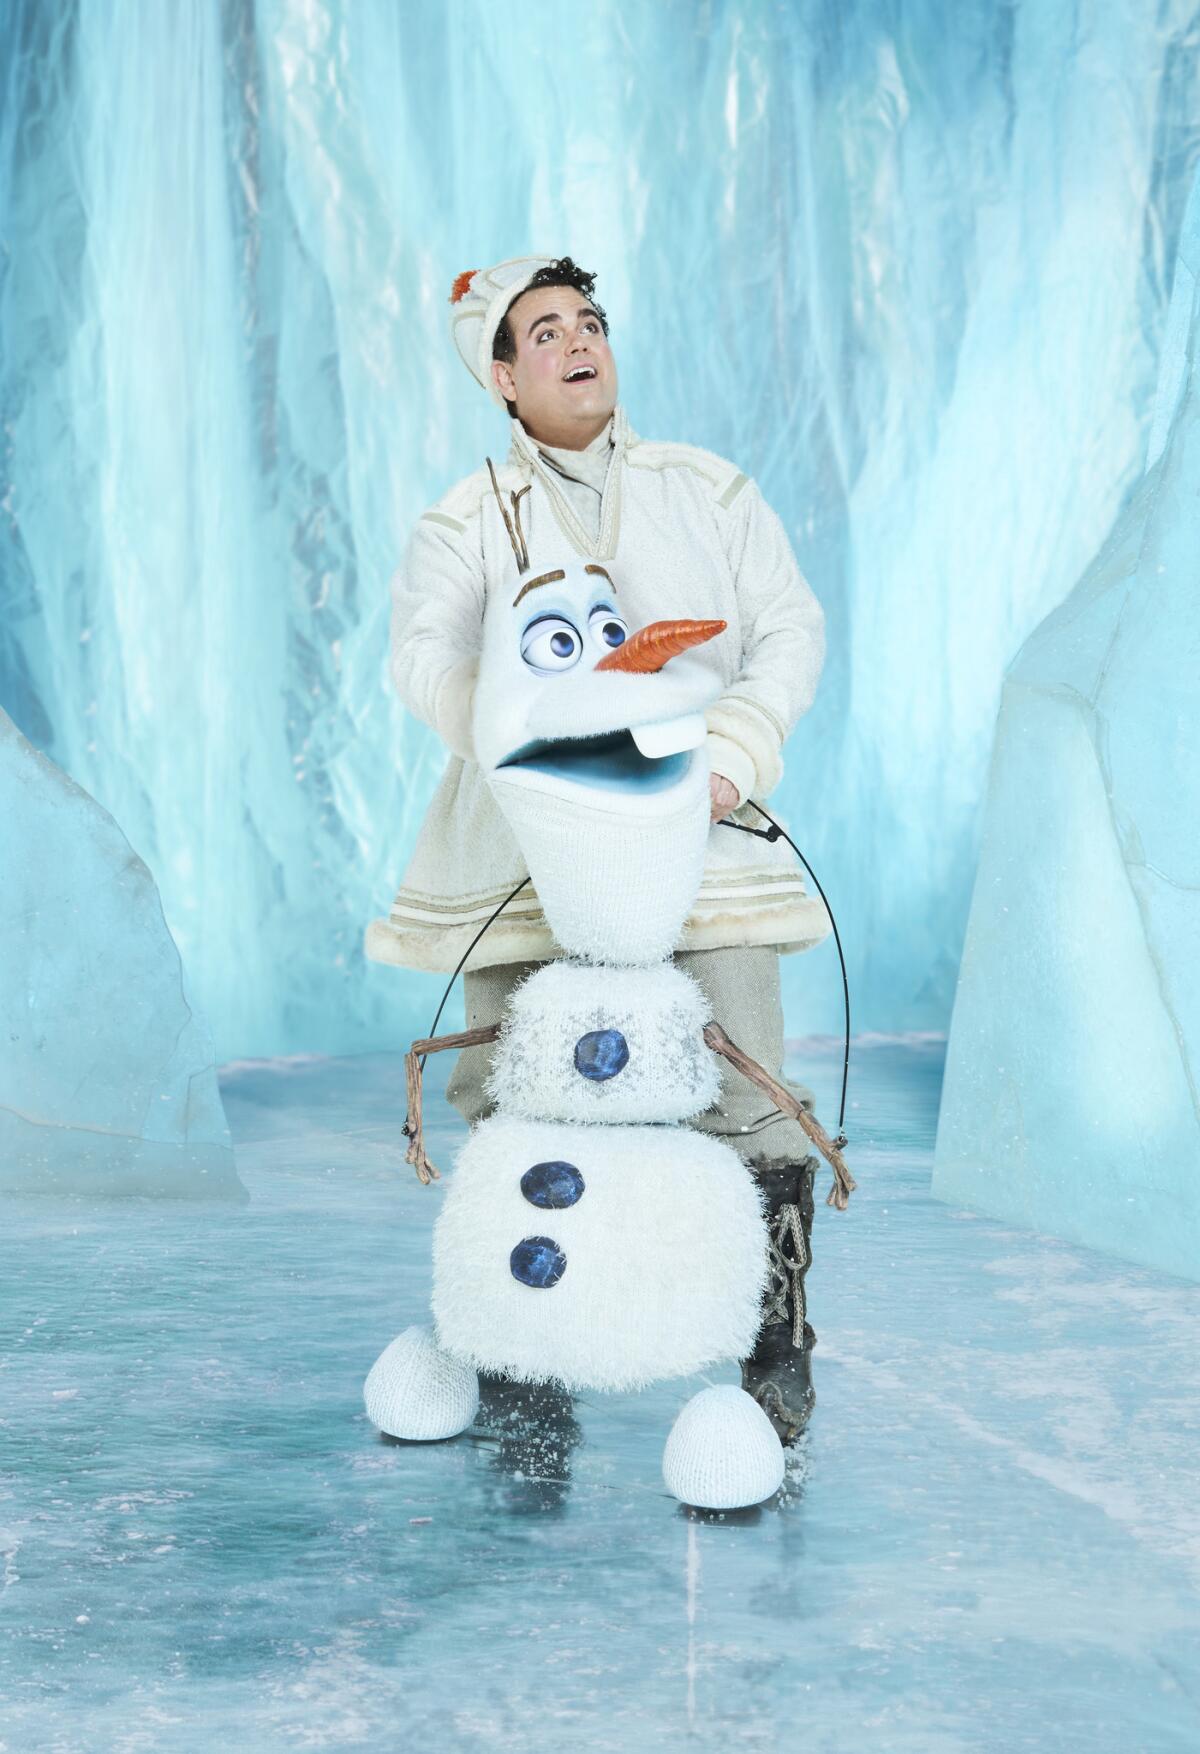 Frozen the Broadway Musical - Olaf Plush - Frozen